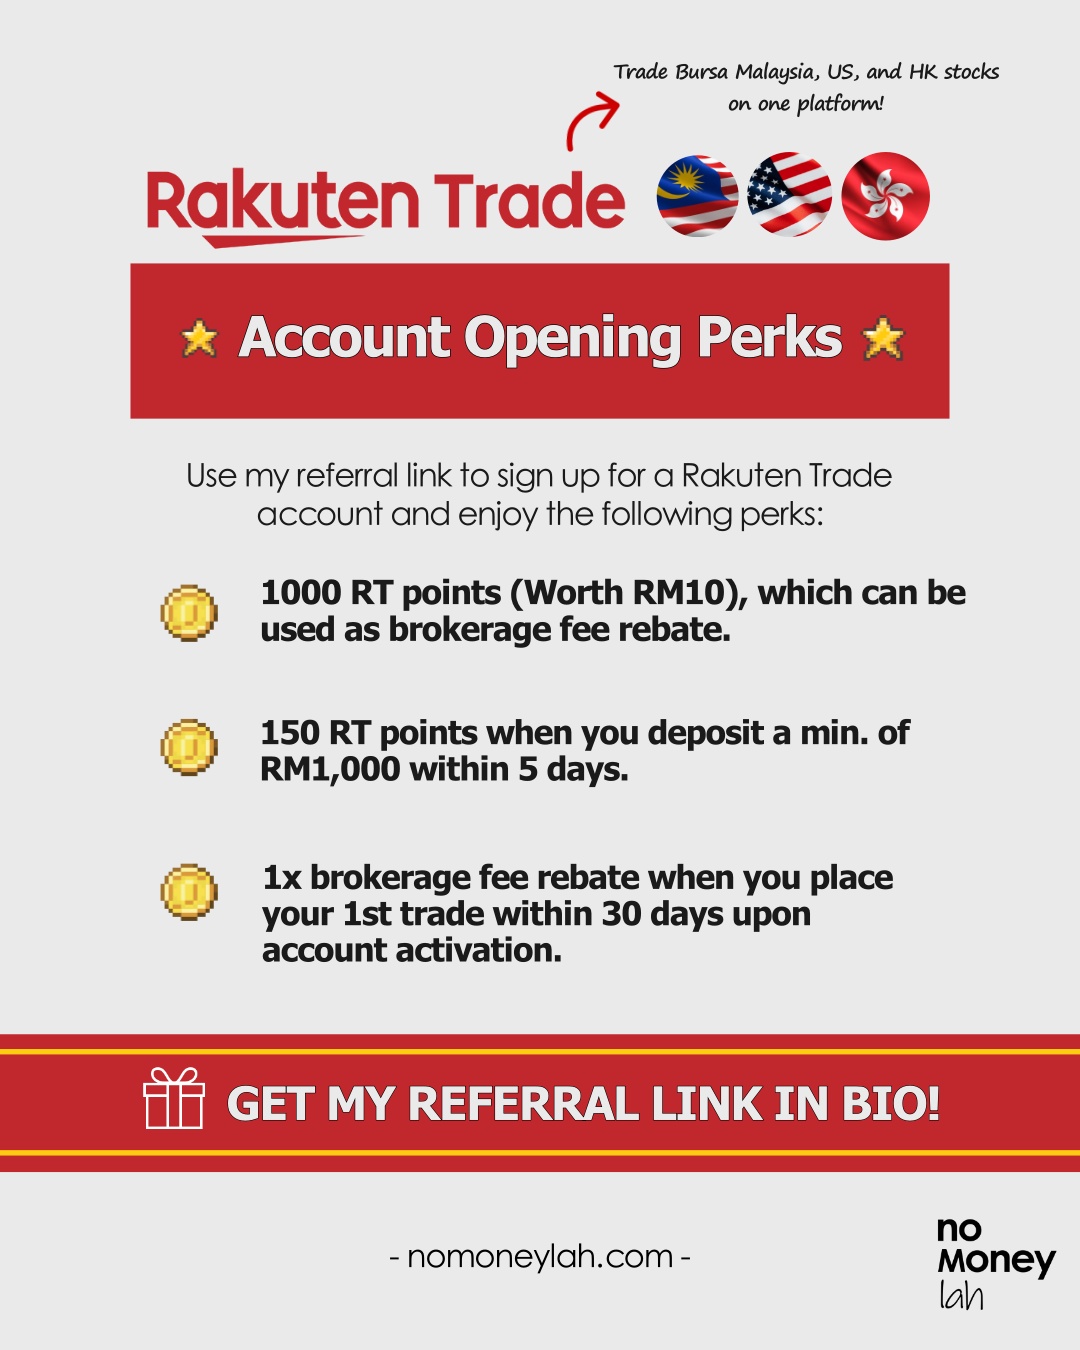 Rakuten Trade US and Hong Kong Stock Trading Review and Referral Link